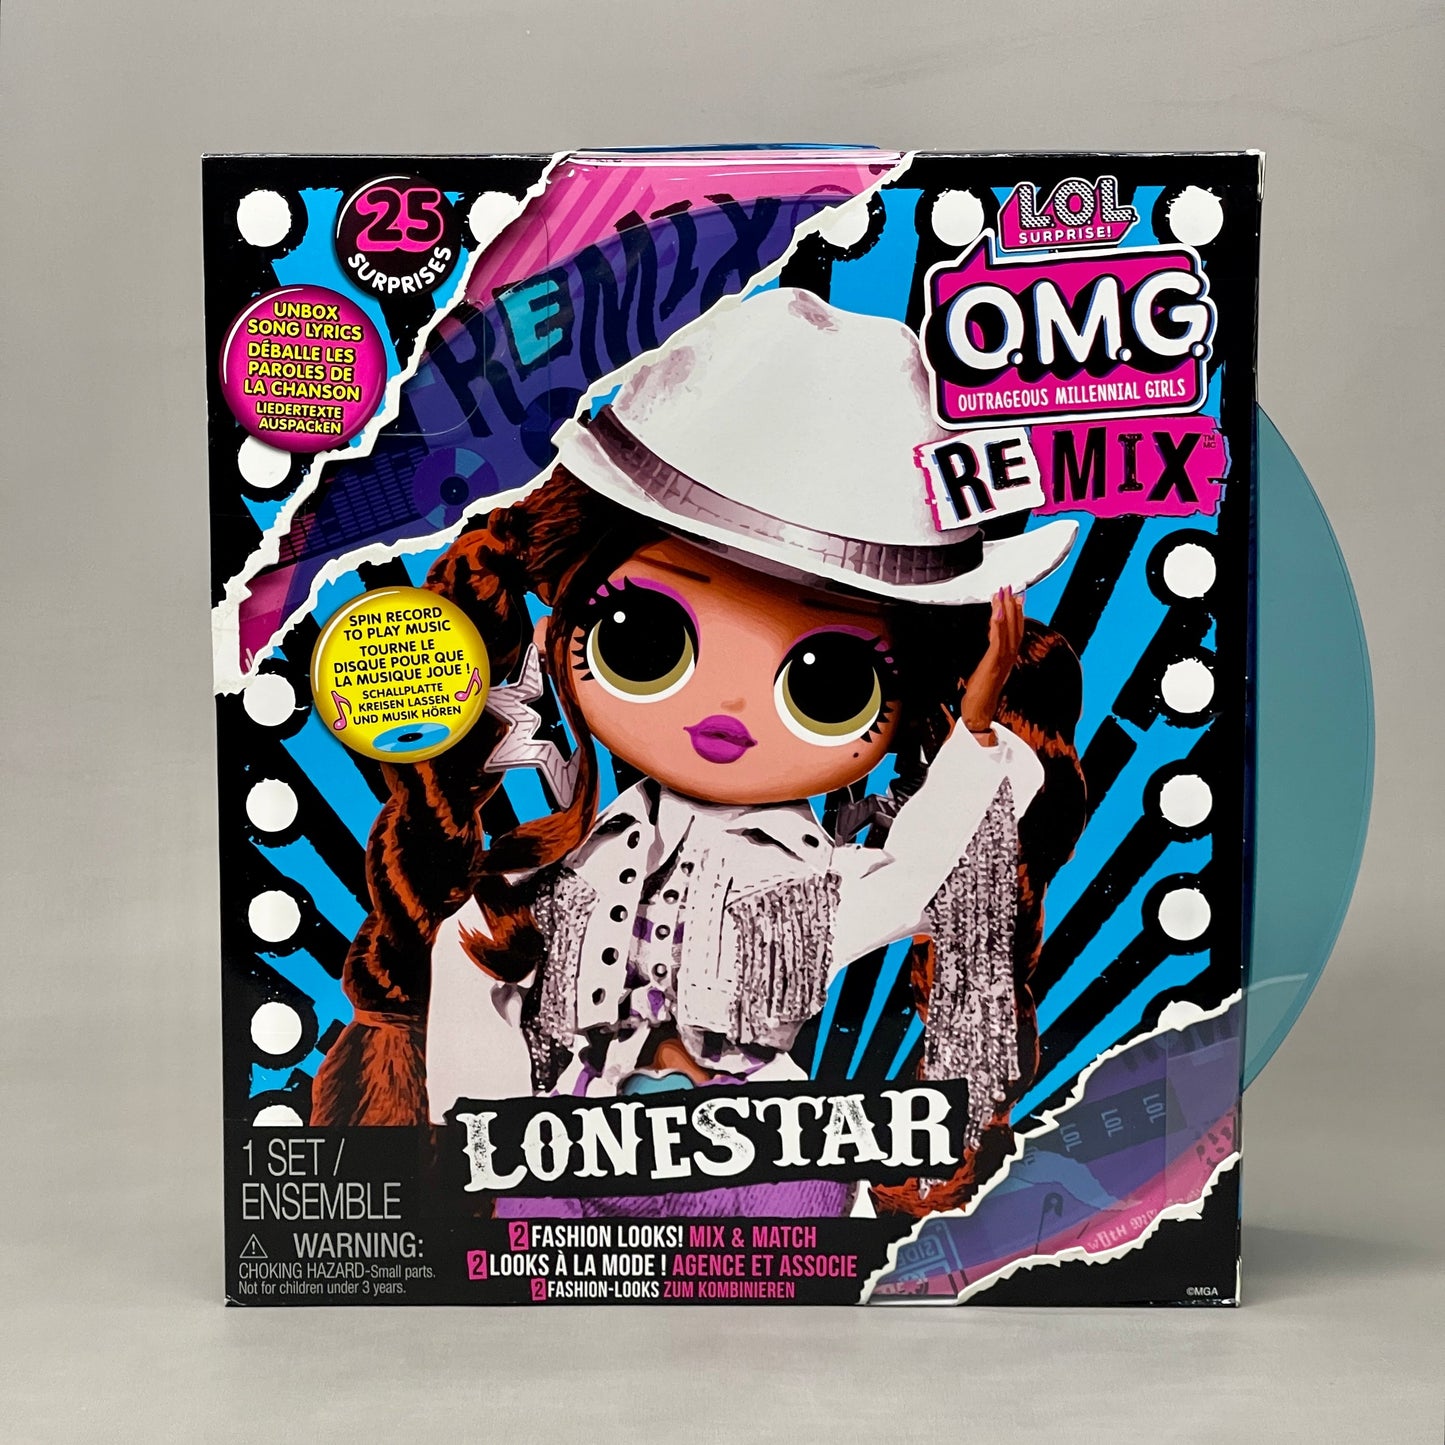 LOL Surprise OMG Remix Lonestar Doll w/ Surprises Ages 4 & up (New)